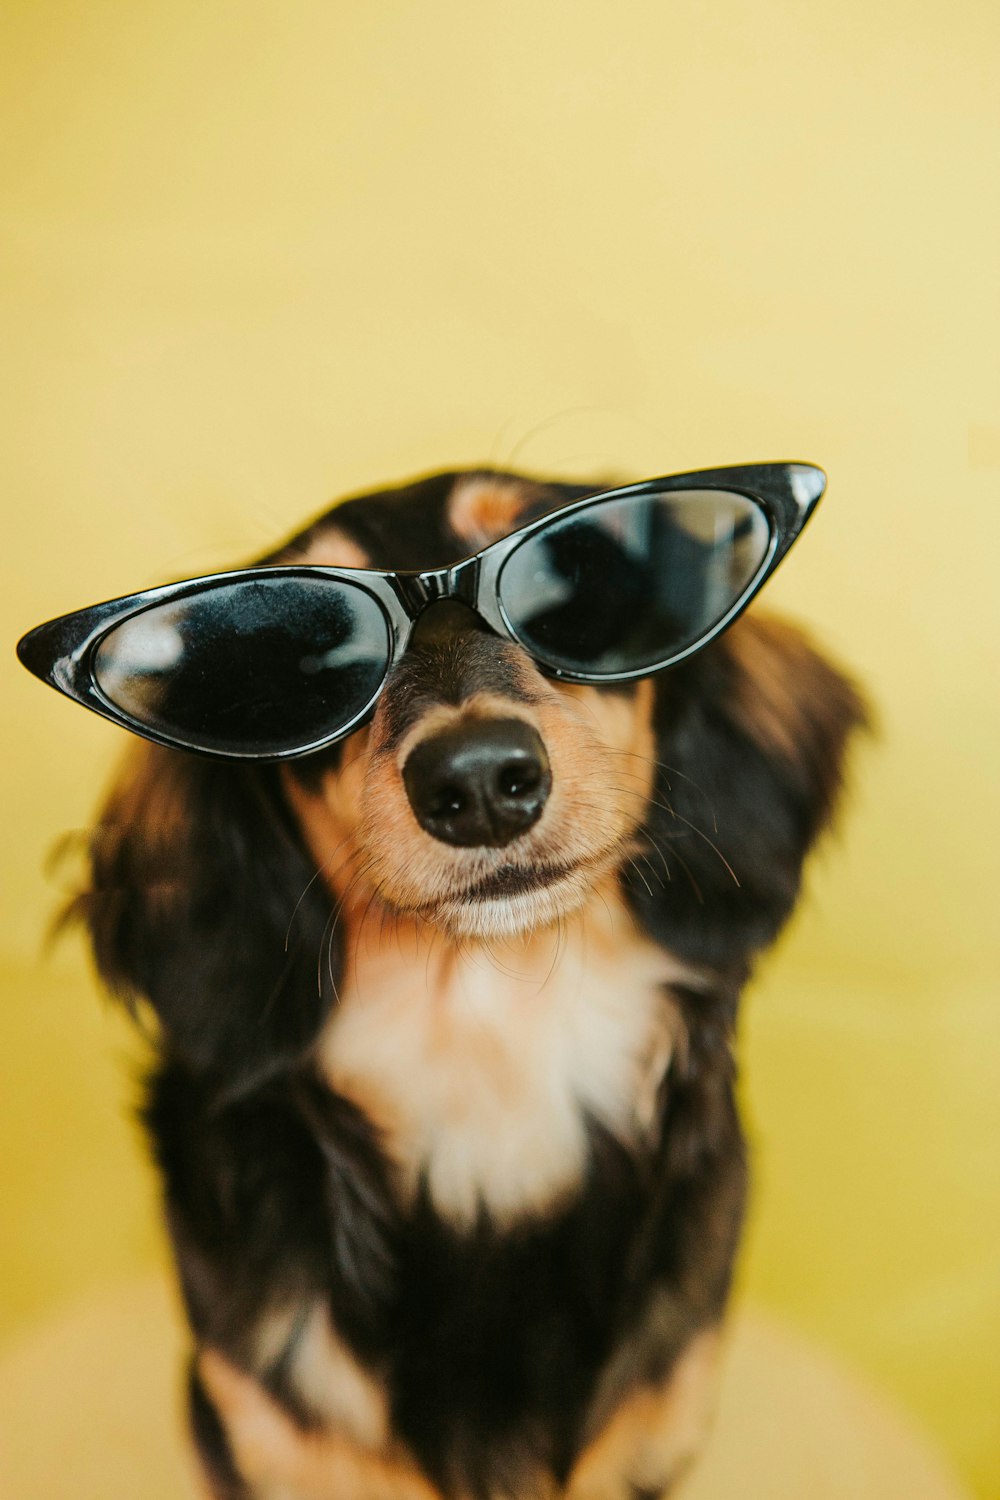 Dog Sunglasses Pictures | Download Free Images on Unsplash